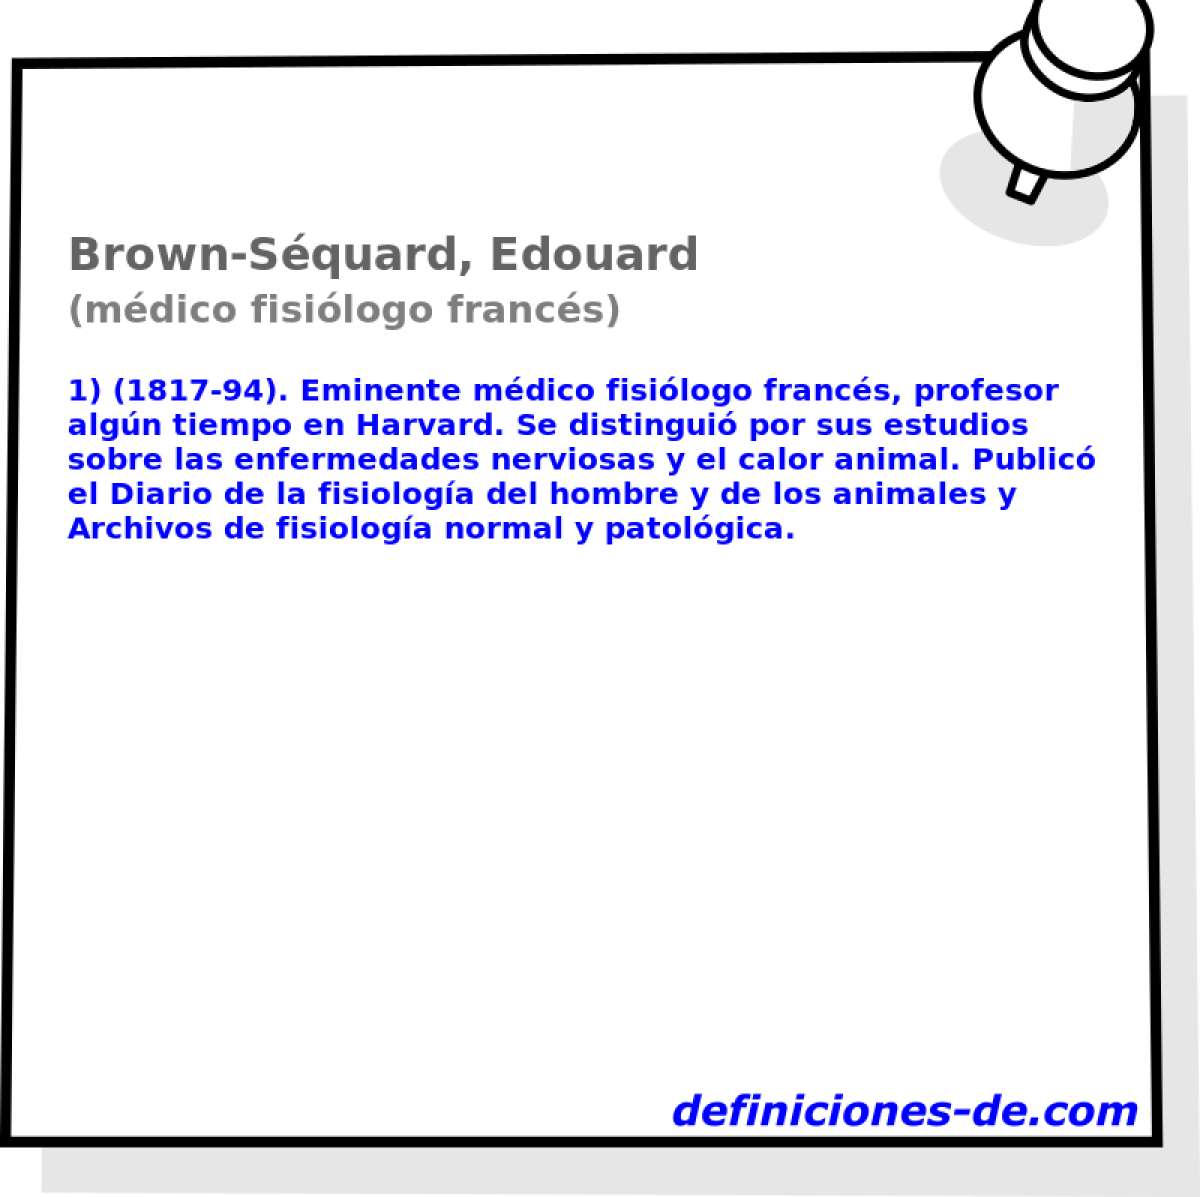 Brown-Squard, Edouard (mdico fisilogo francs)